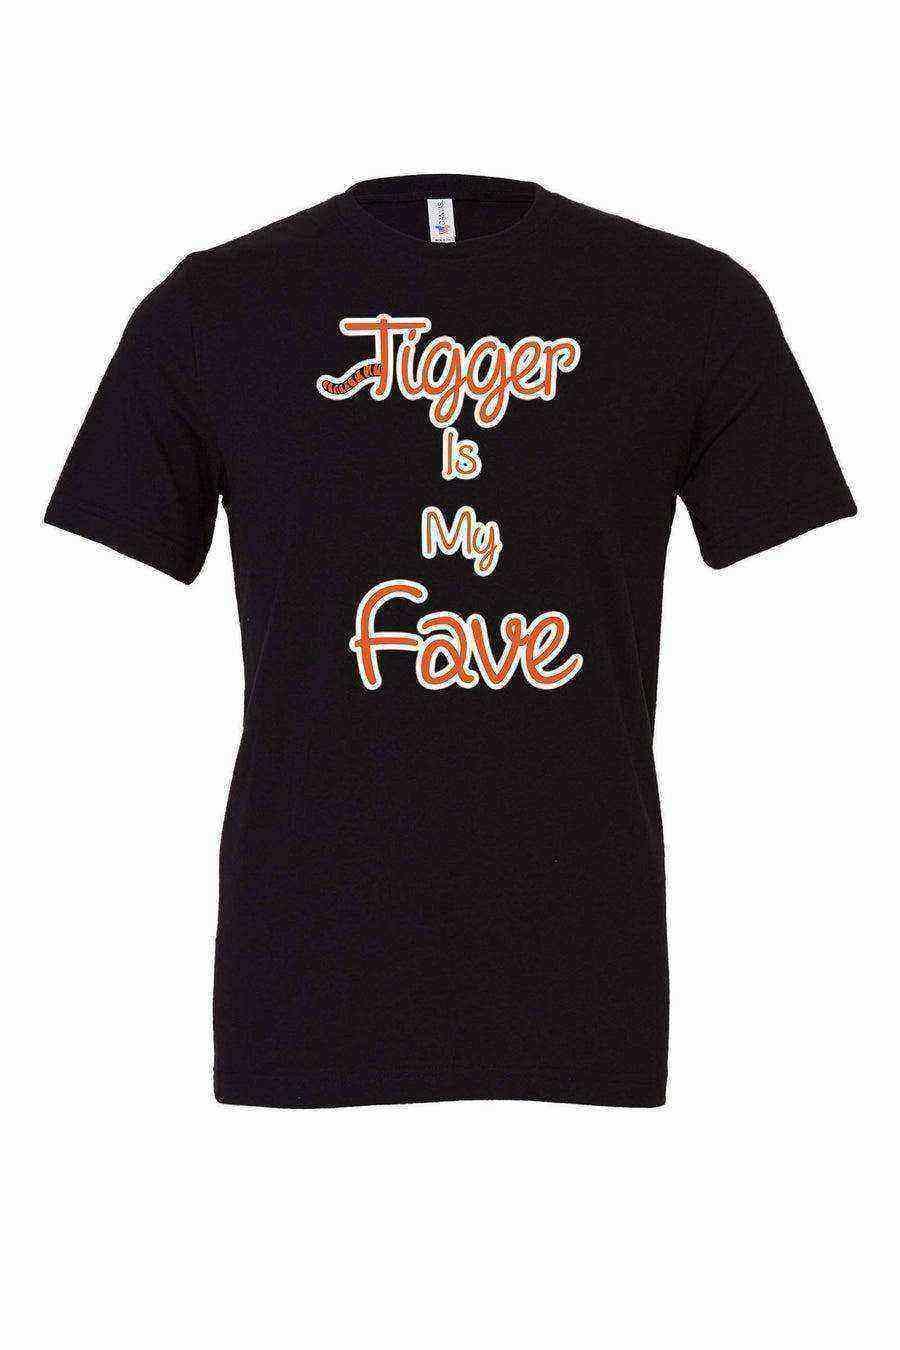 Toddler | Tigger is my Fave Shirt - Dylan's Tees